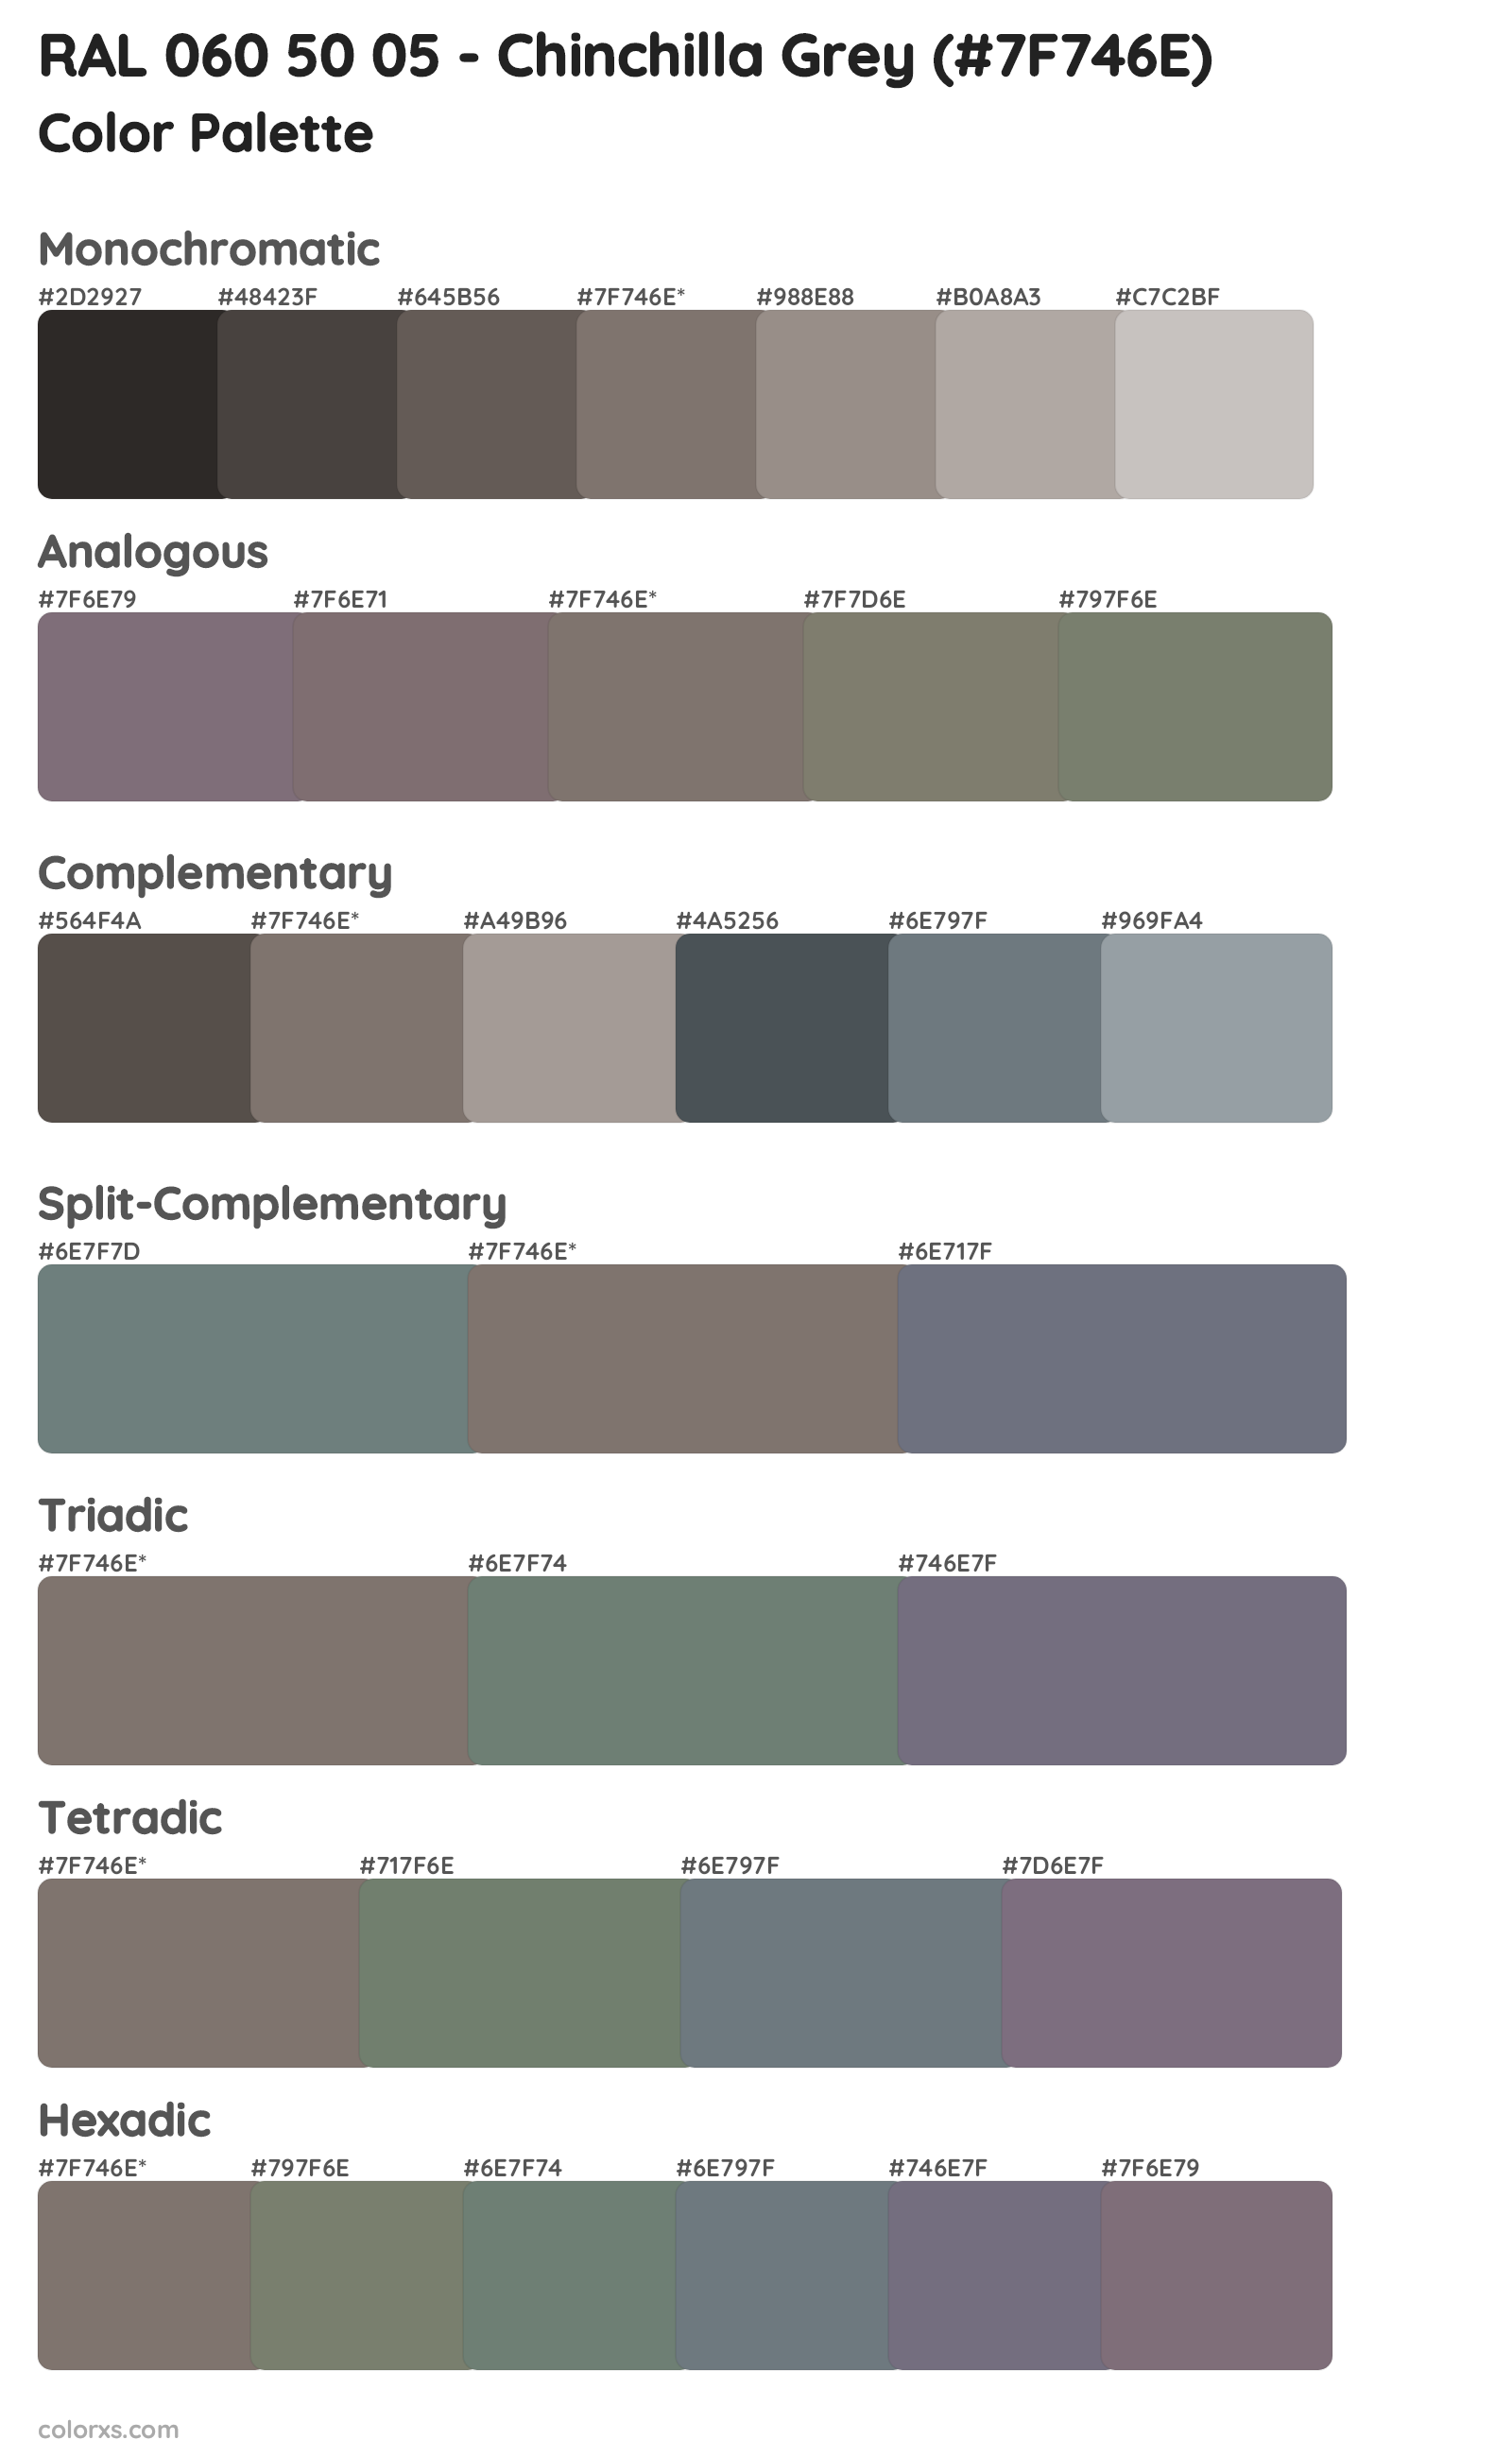 RAL 060 50 05 - Chinchilla Grey Color Scheme Palettes